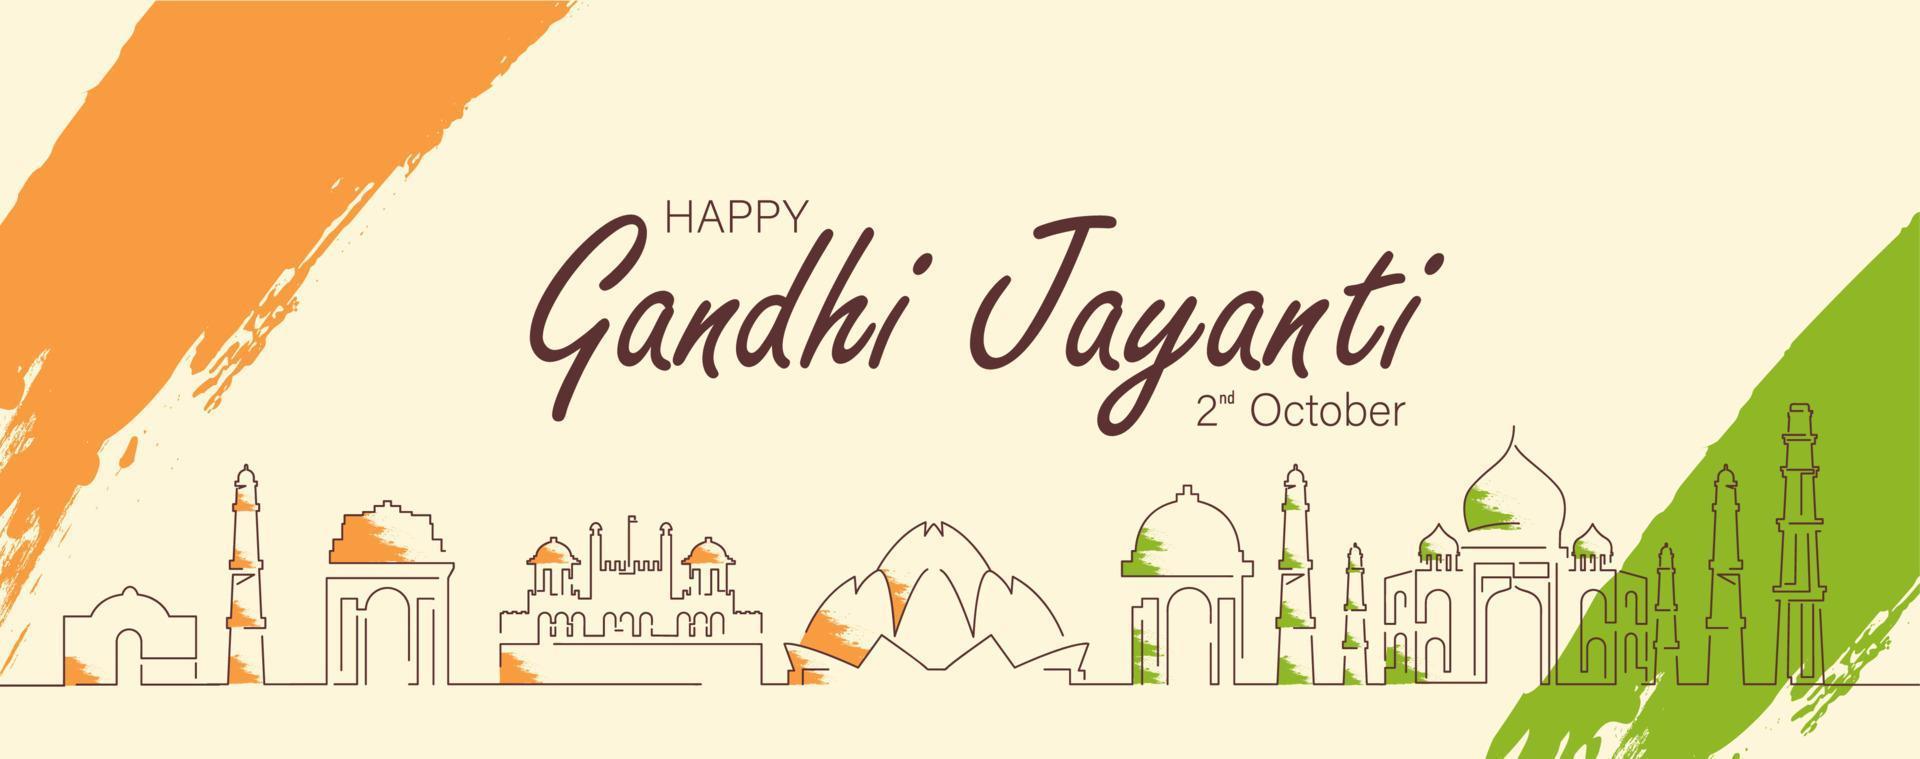 illustration vectorielle heureuse de gandhi jayanti. anniversaire de mohandas karam chandra gandhi. vecteur